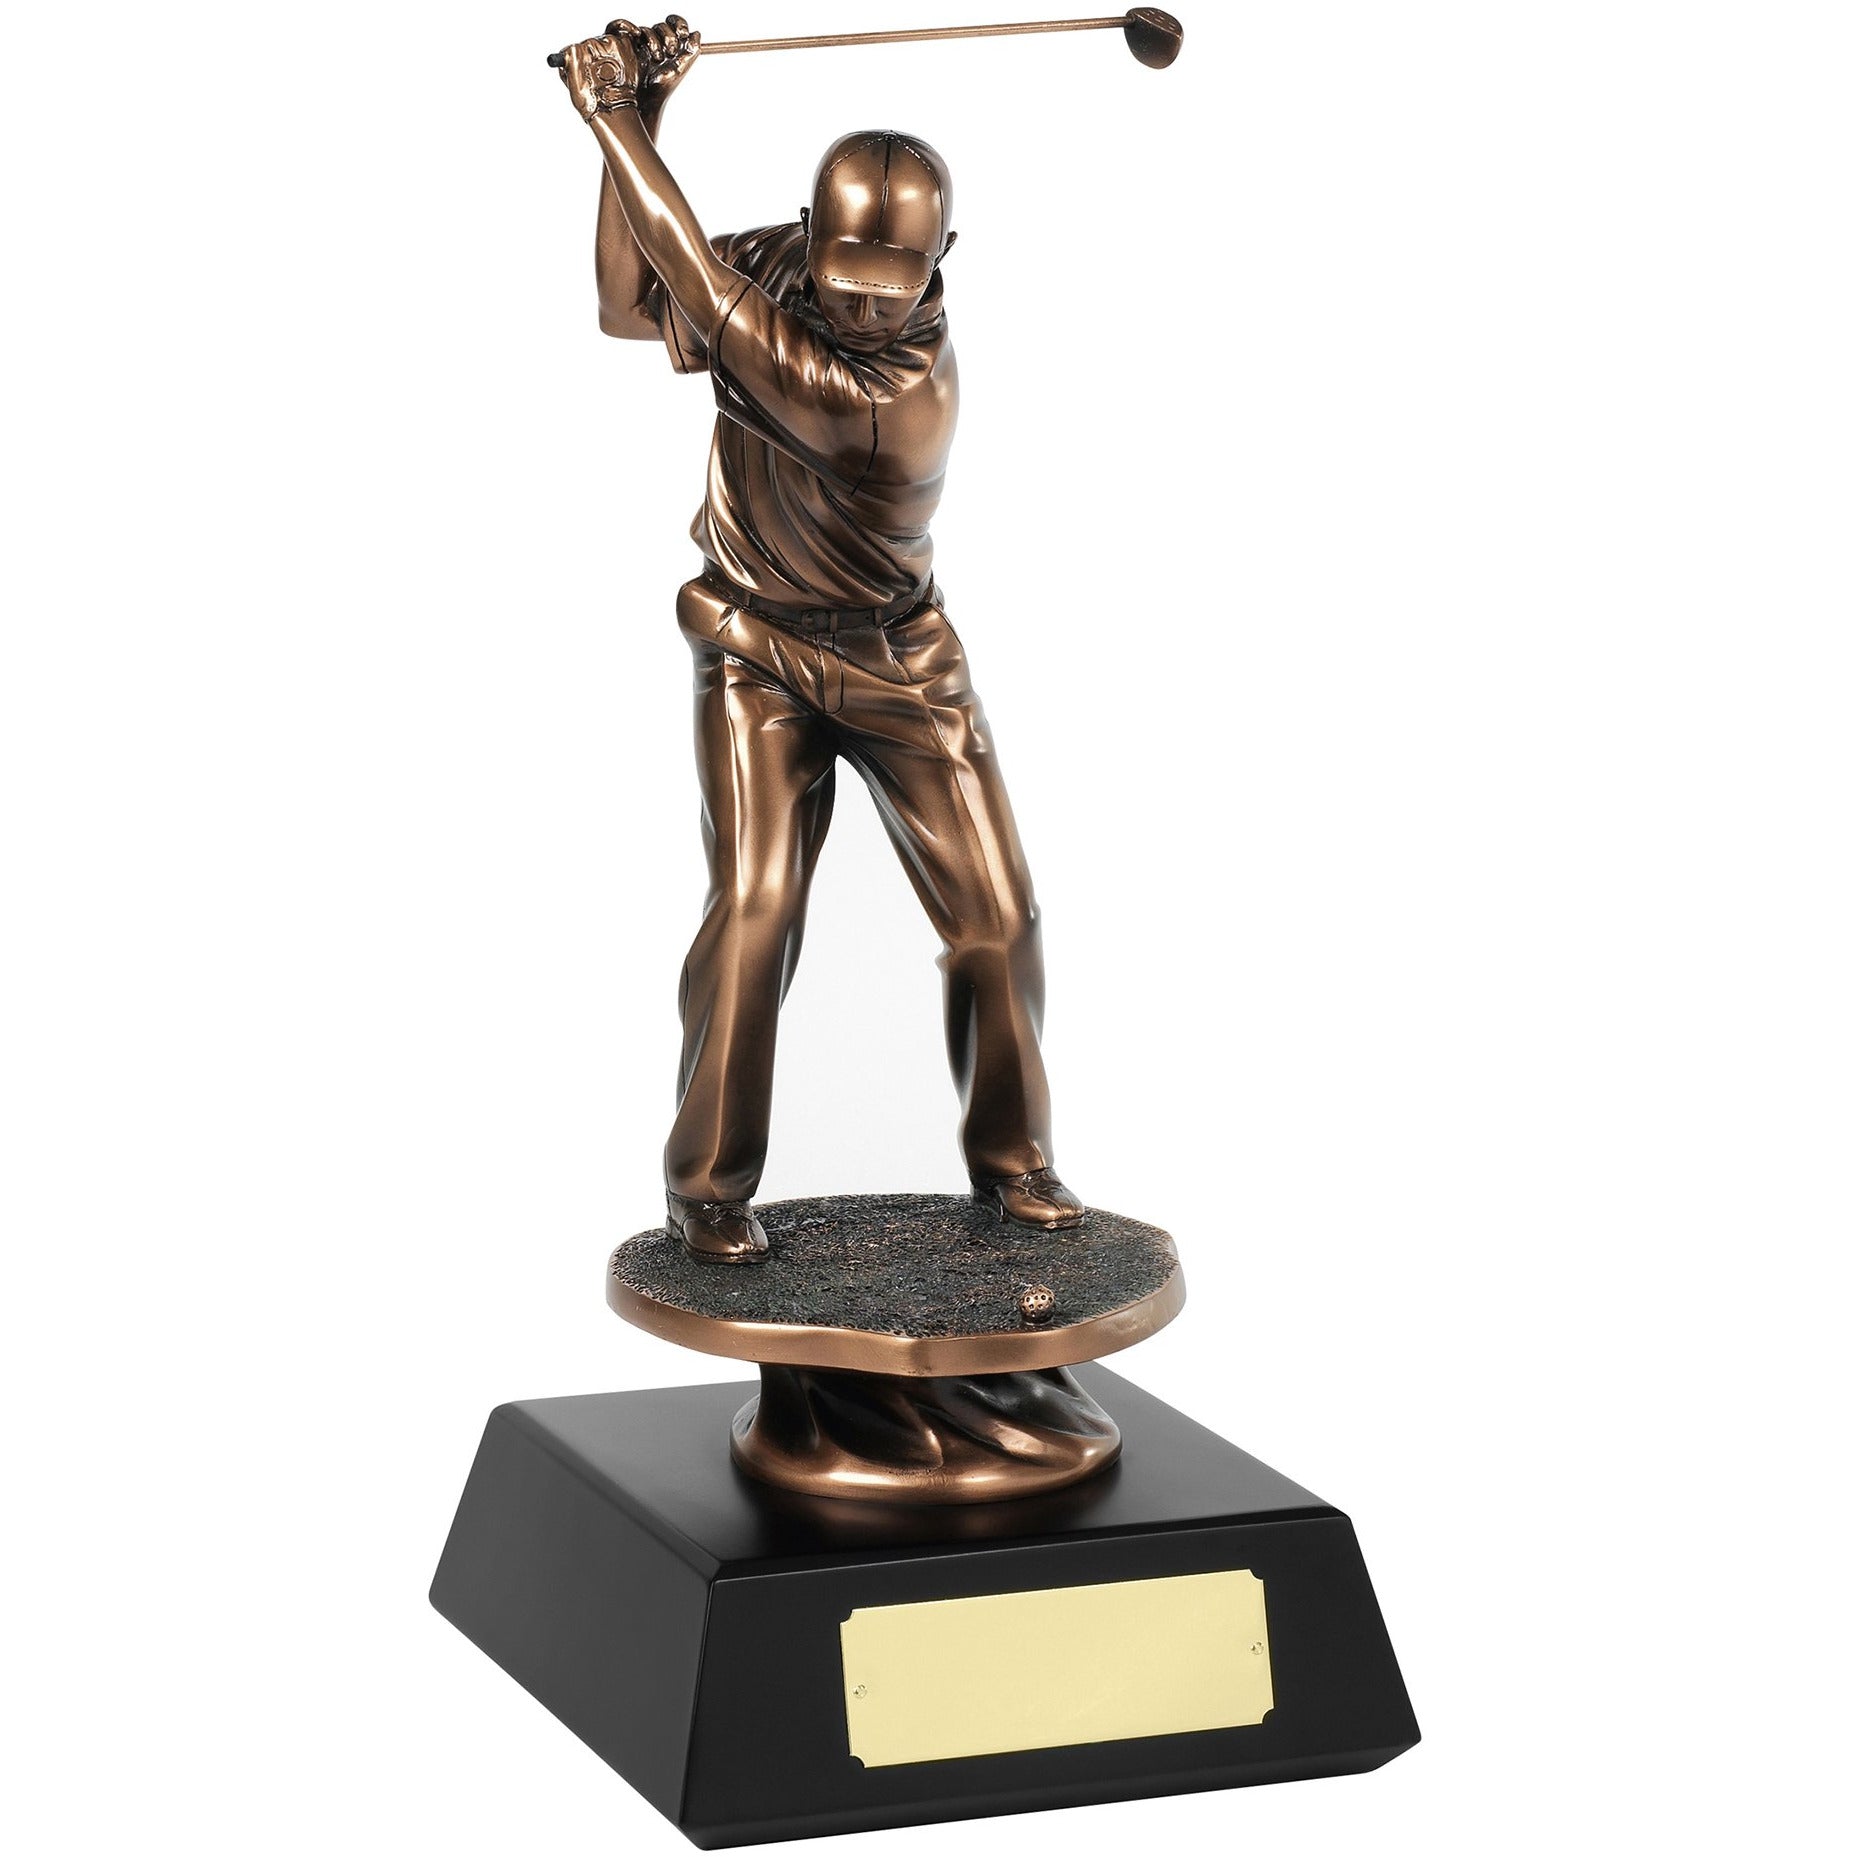 Champion Driver Bronze Plated Golf Figurine Trophy